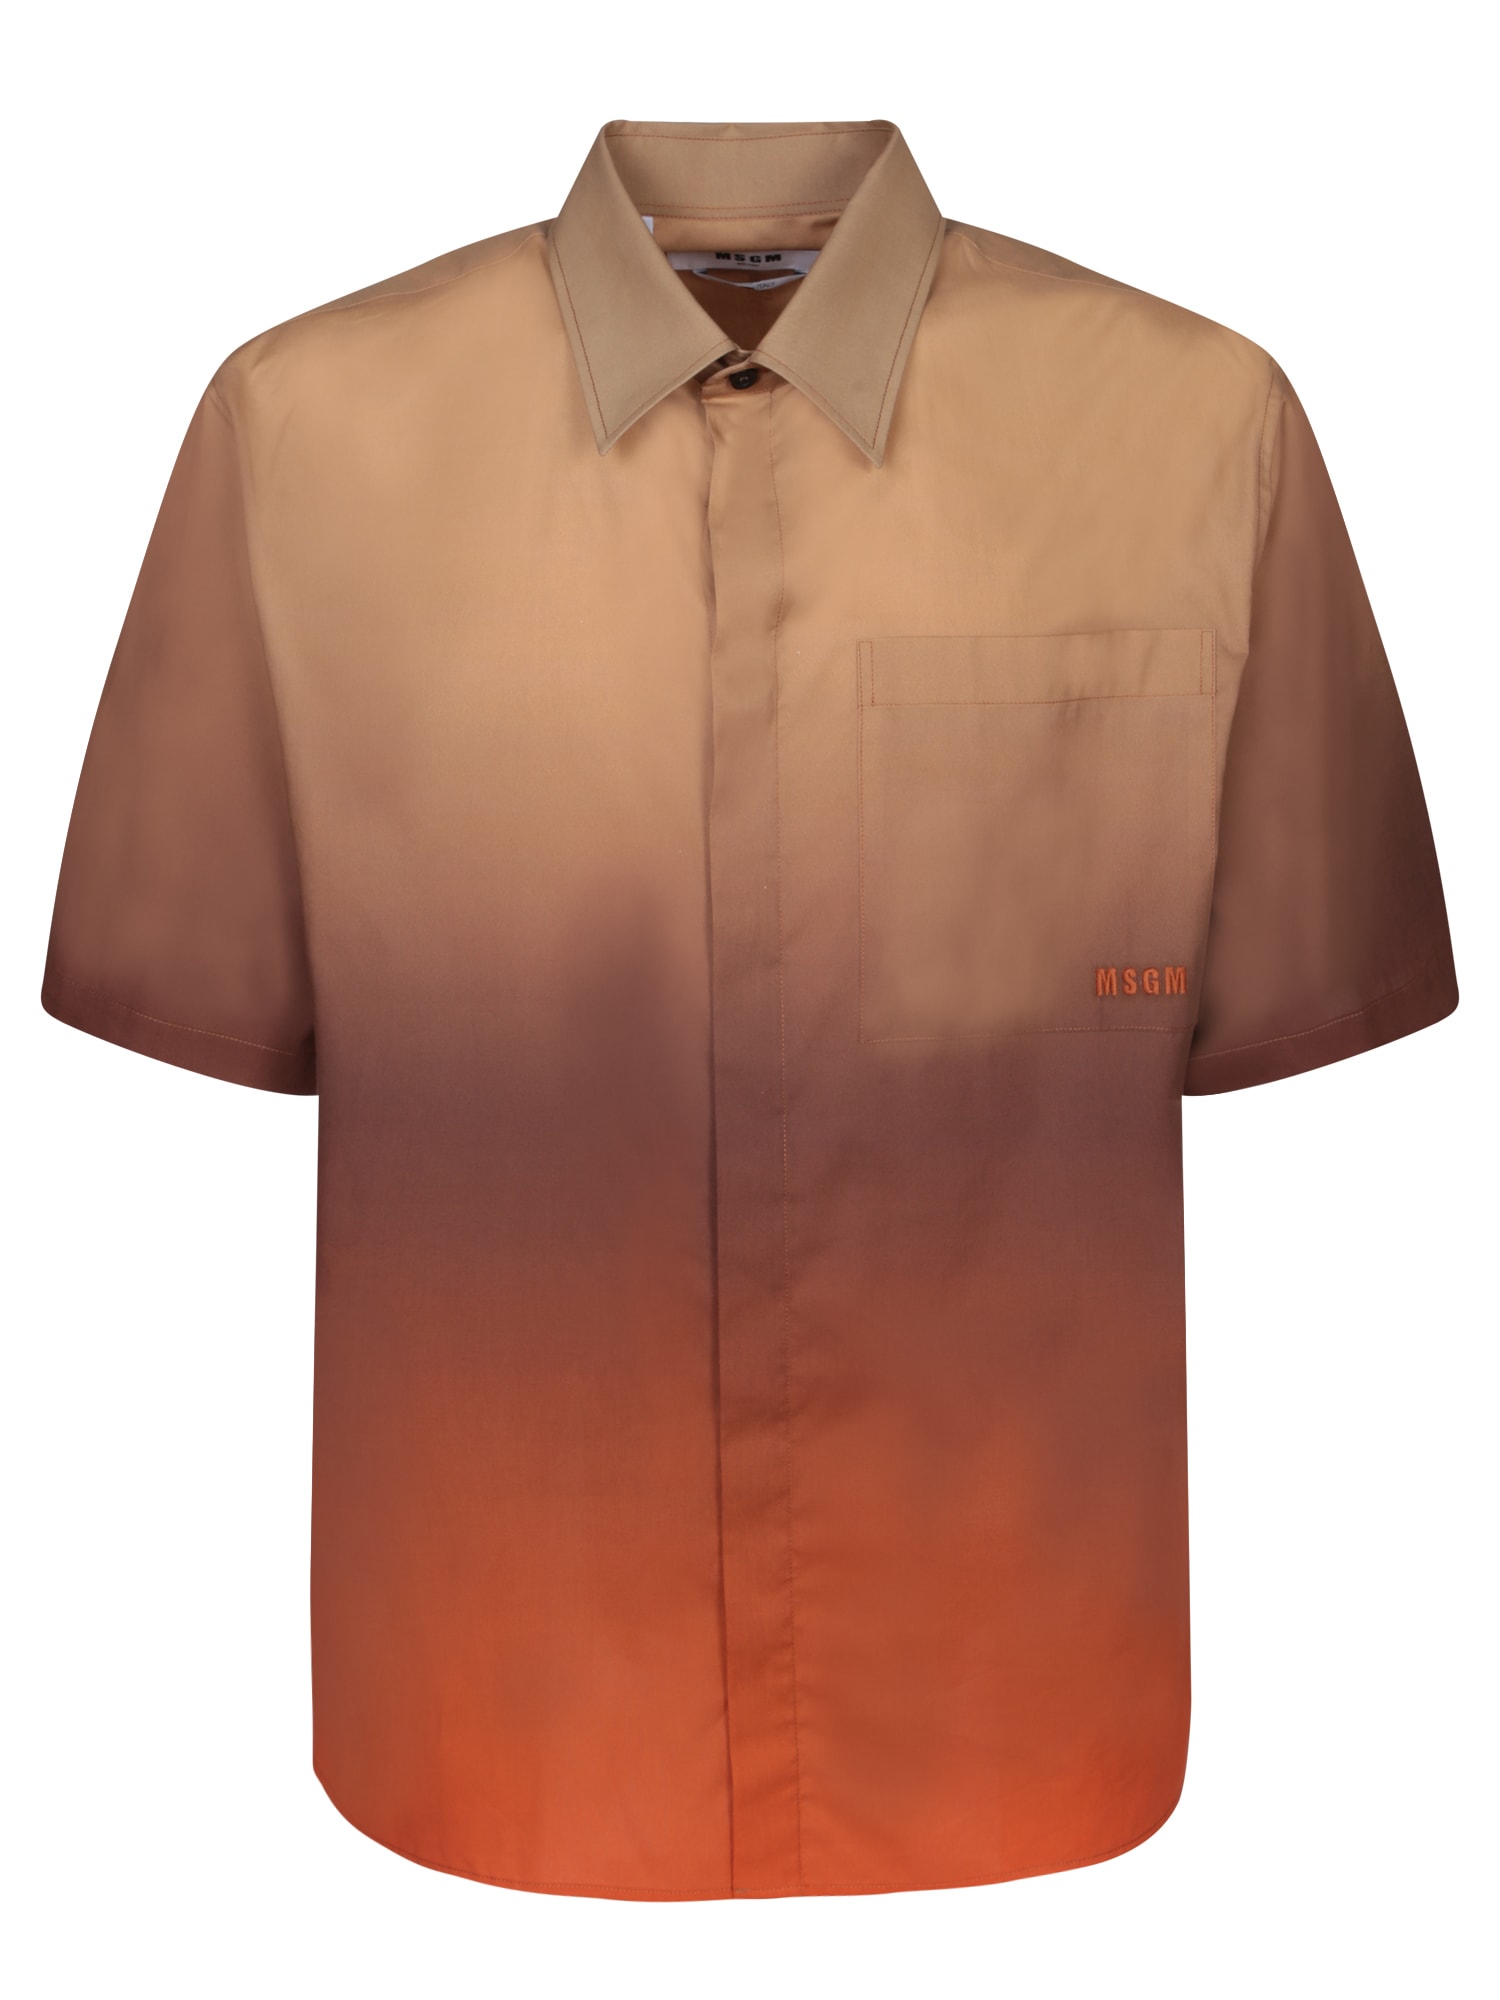 Dregradã¨ Beige/orange Shirt